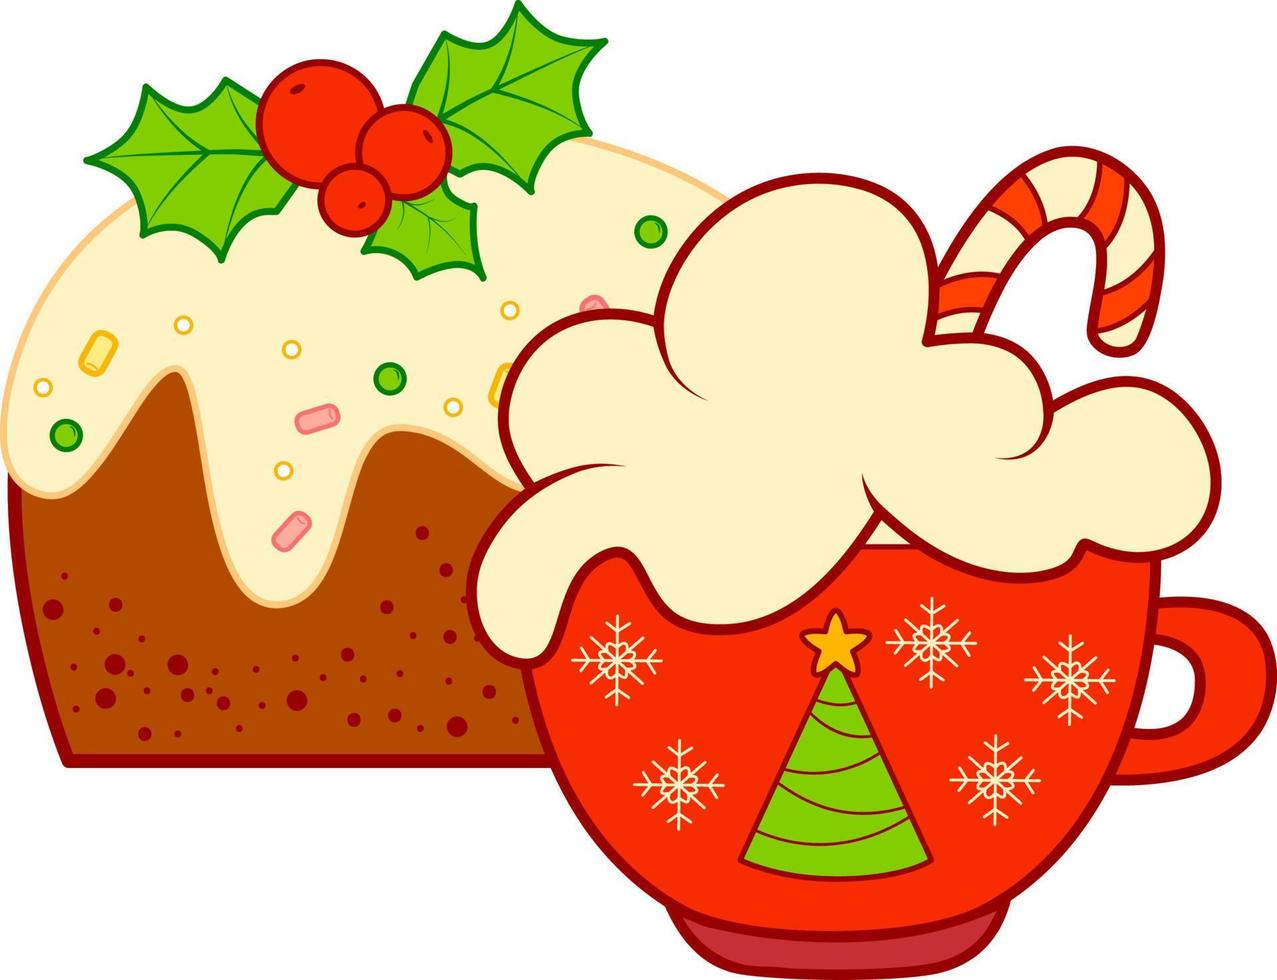 Christmas cartoons clip art. Christmas cake clipart vector illustration